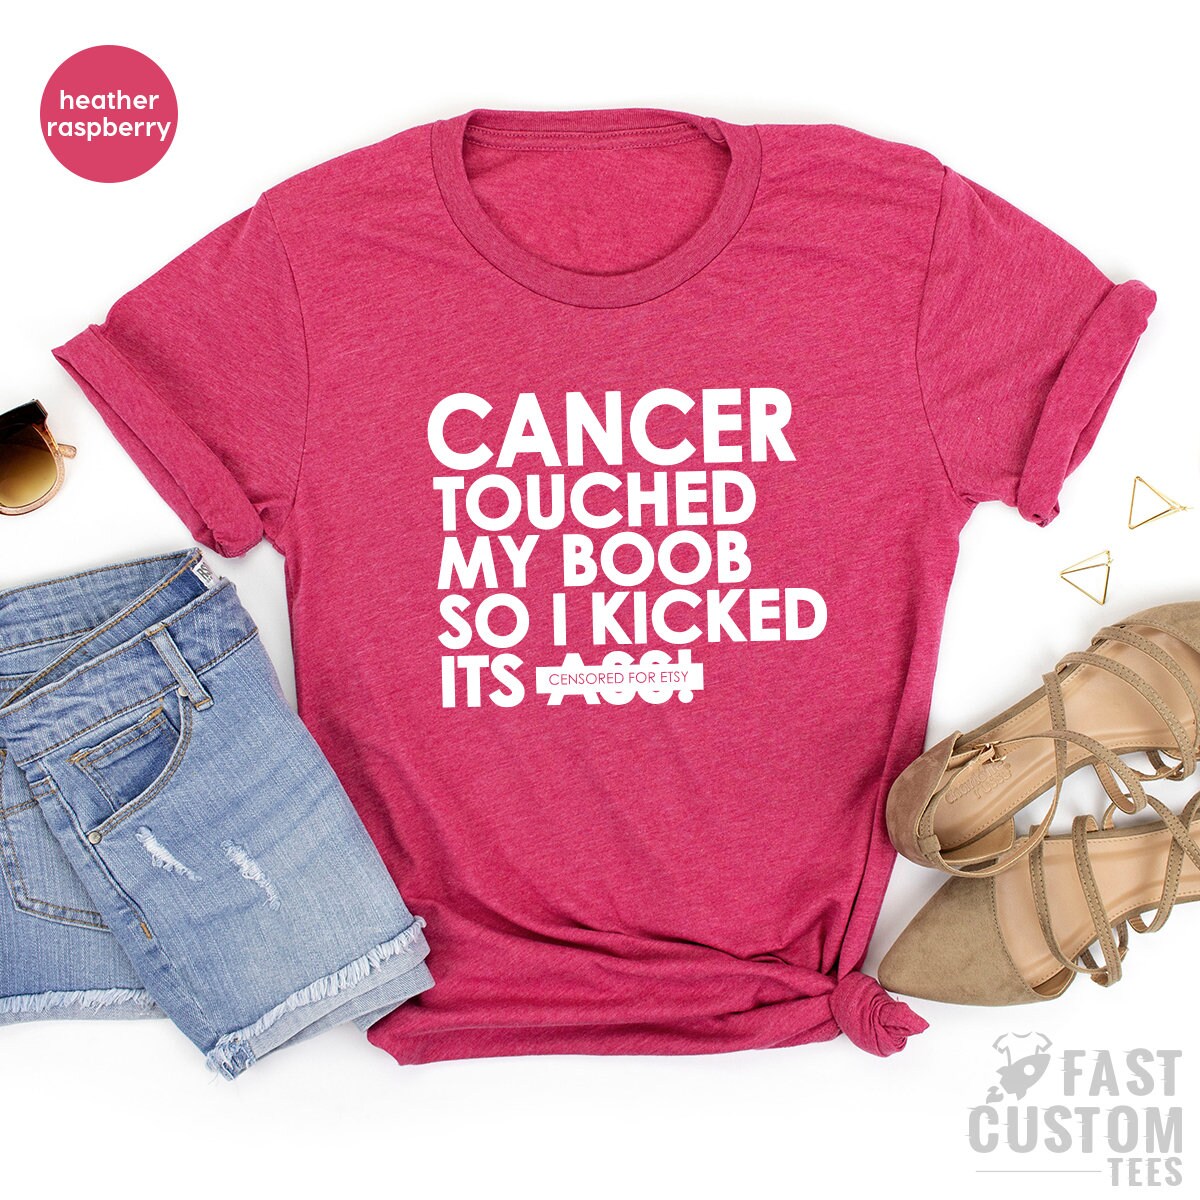 Funny Cancer Shirt, Cancer Awareness Tee, Breast Cancer TShirt, Cancer Touch My Boobs, Cancer Survivor Shirt, Team Cancer Shirt, Cancer Tee - Fastdeliverytees.com